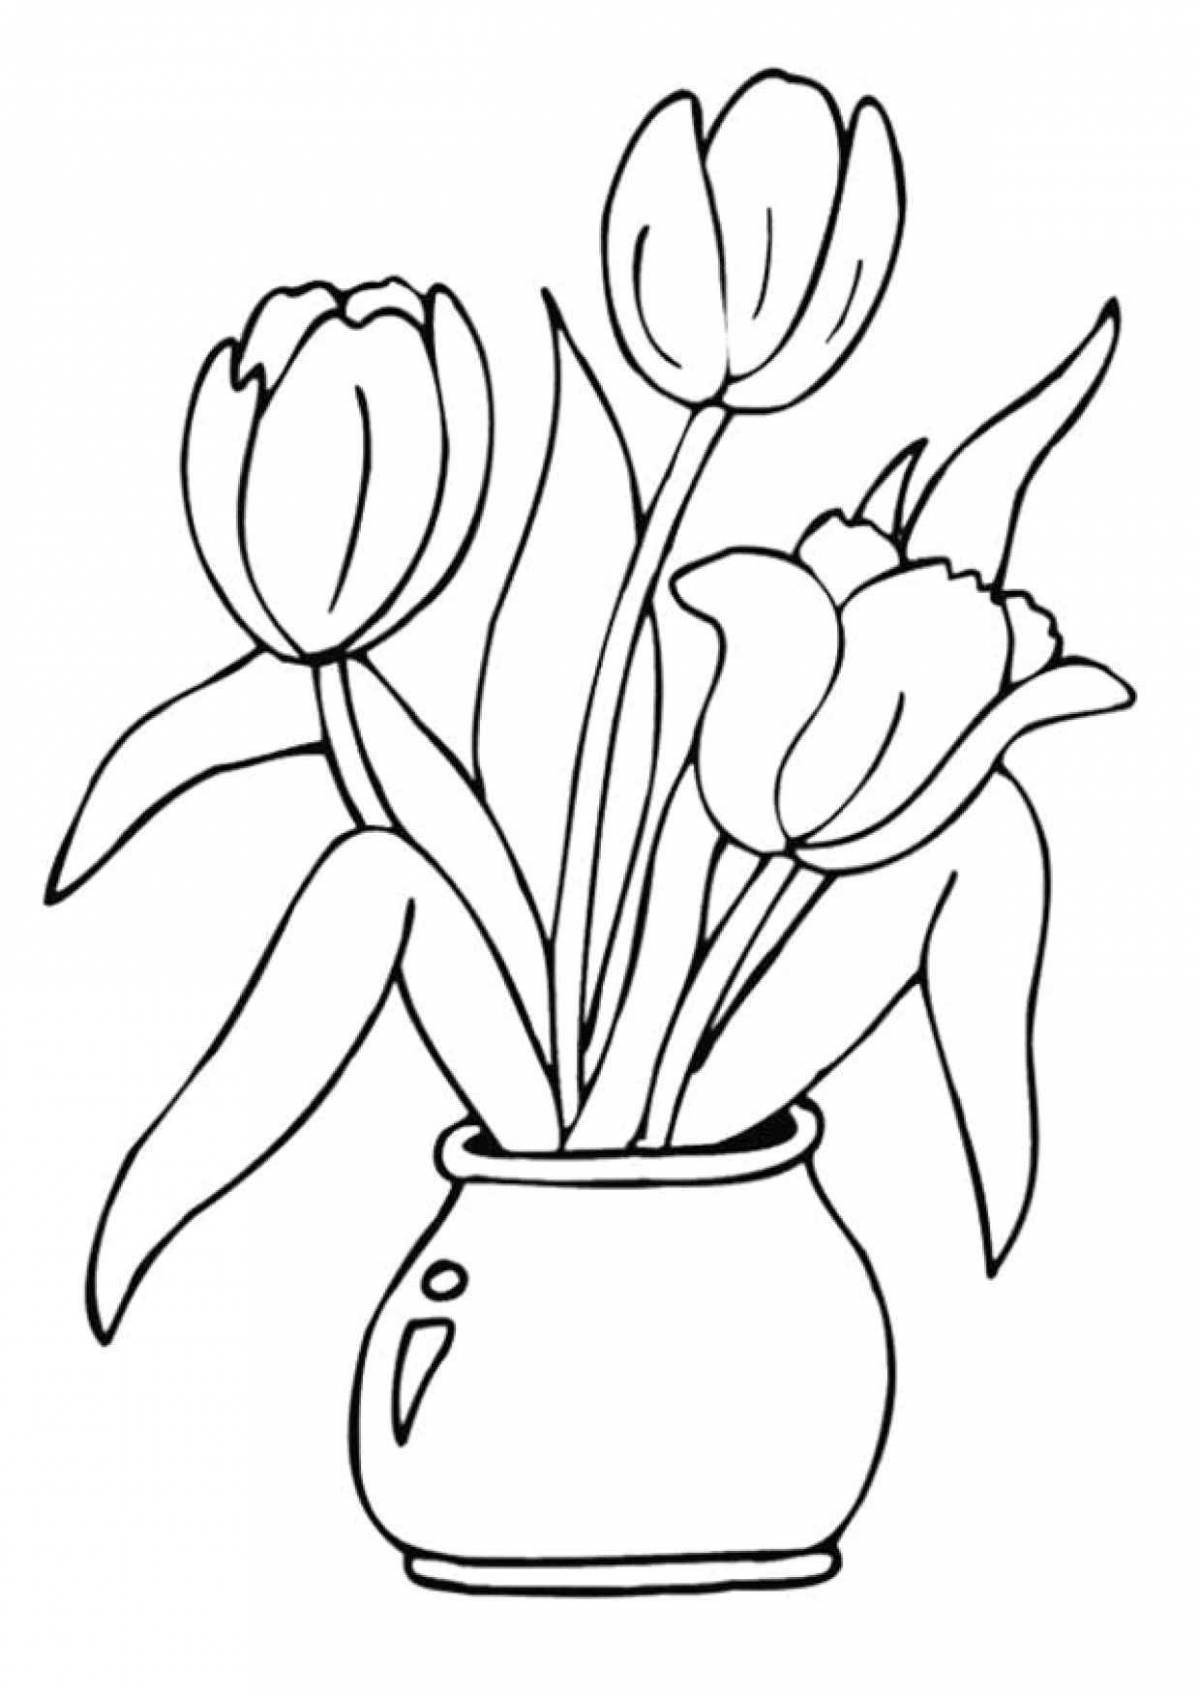 Радостное 8 марта тюльпаны раскраски